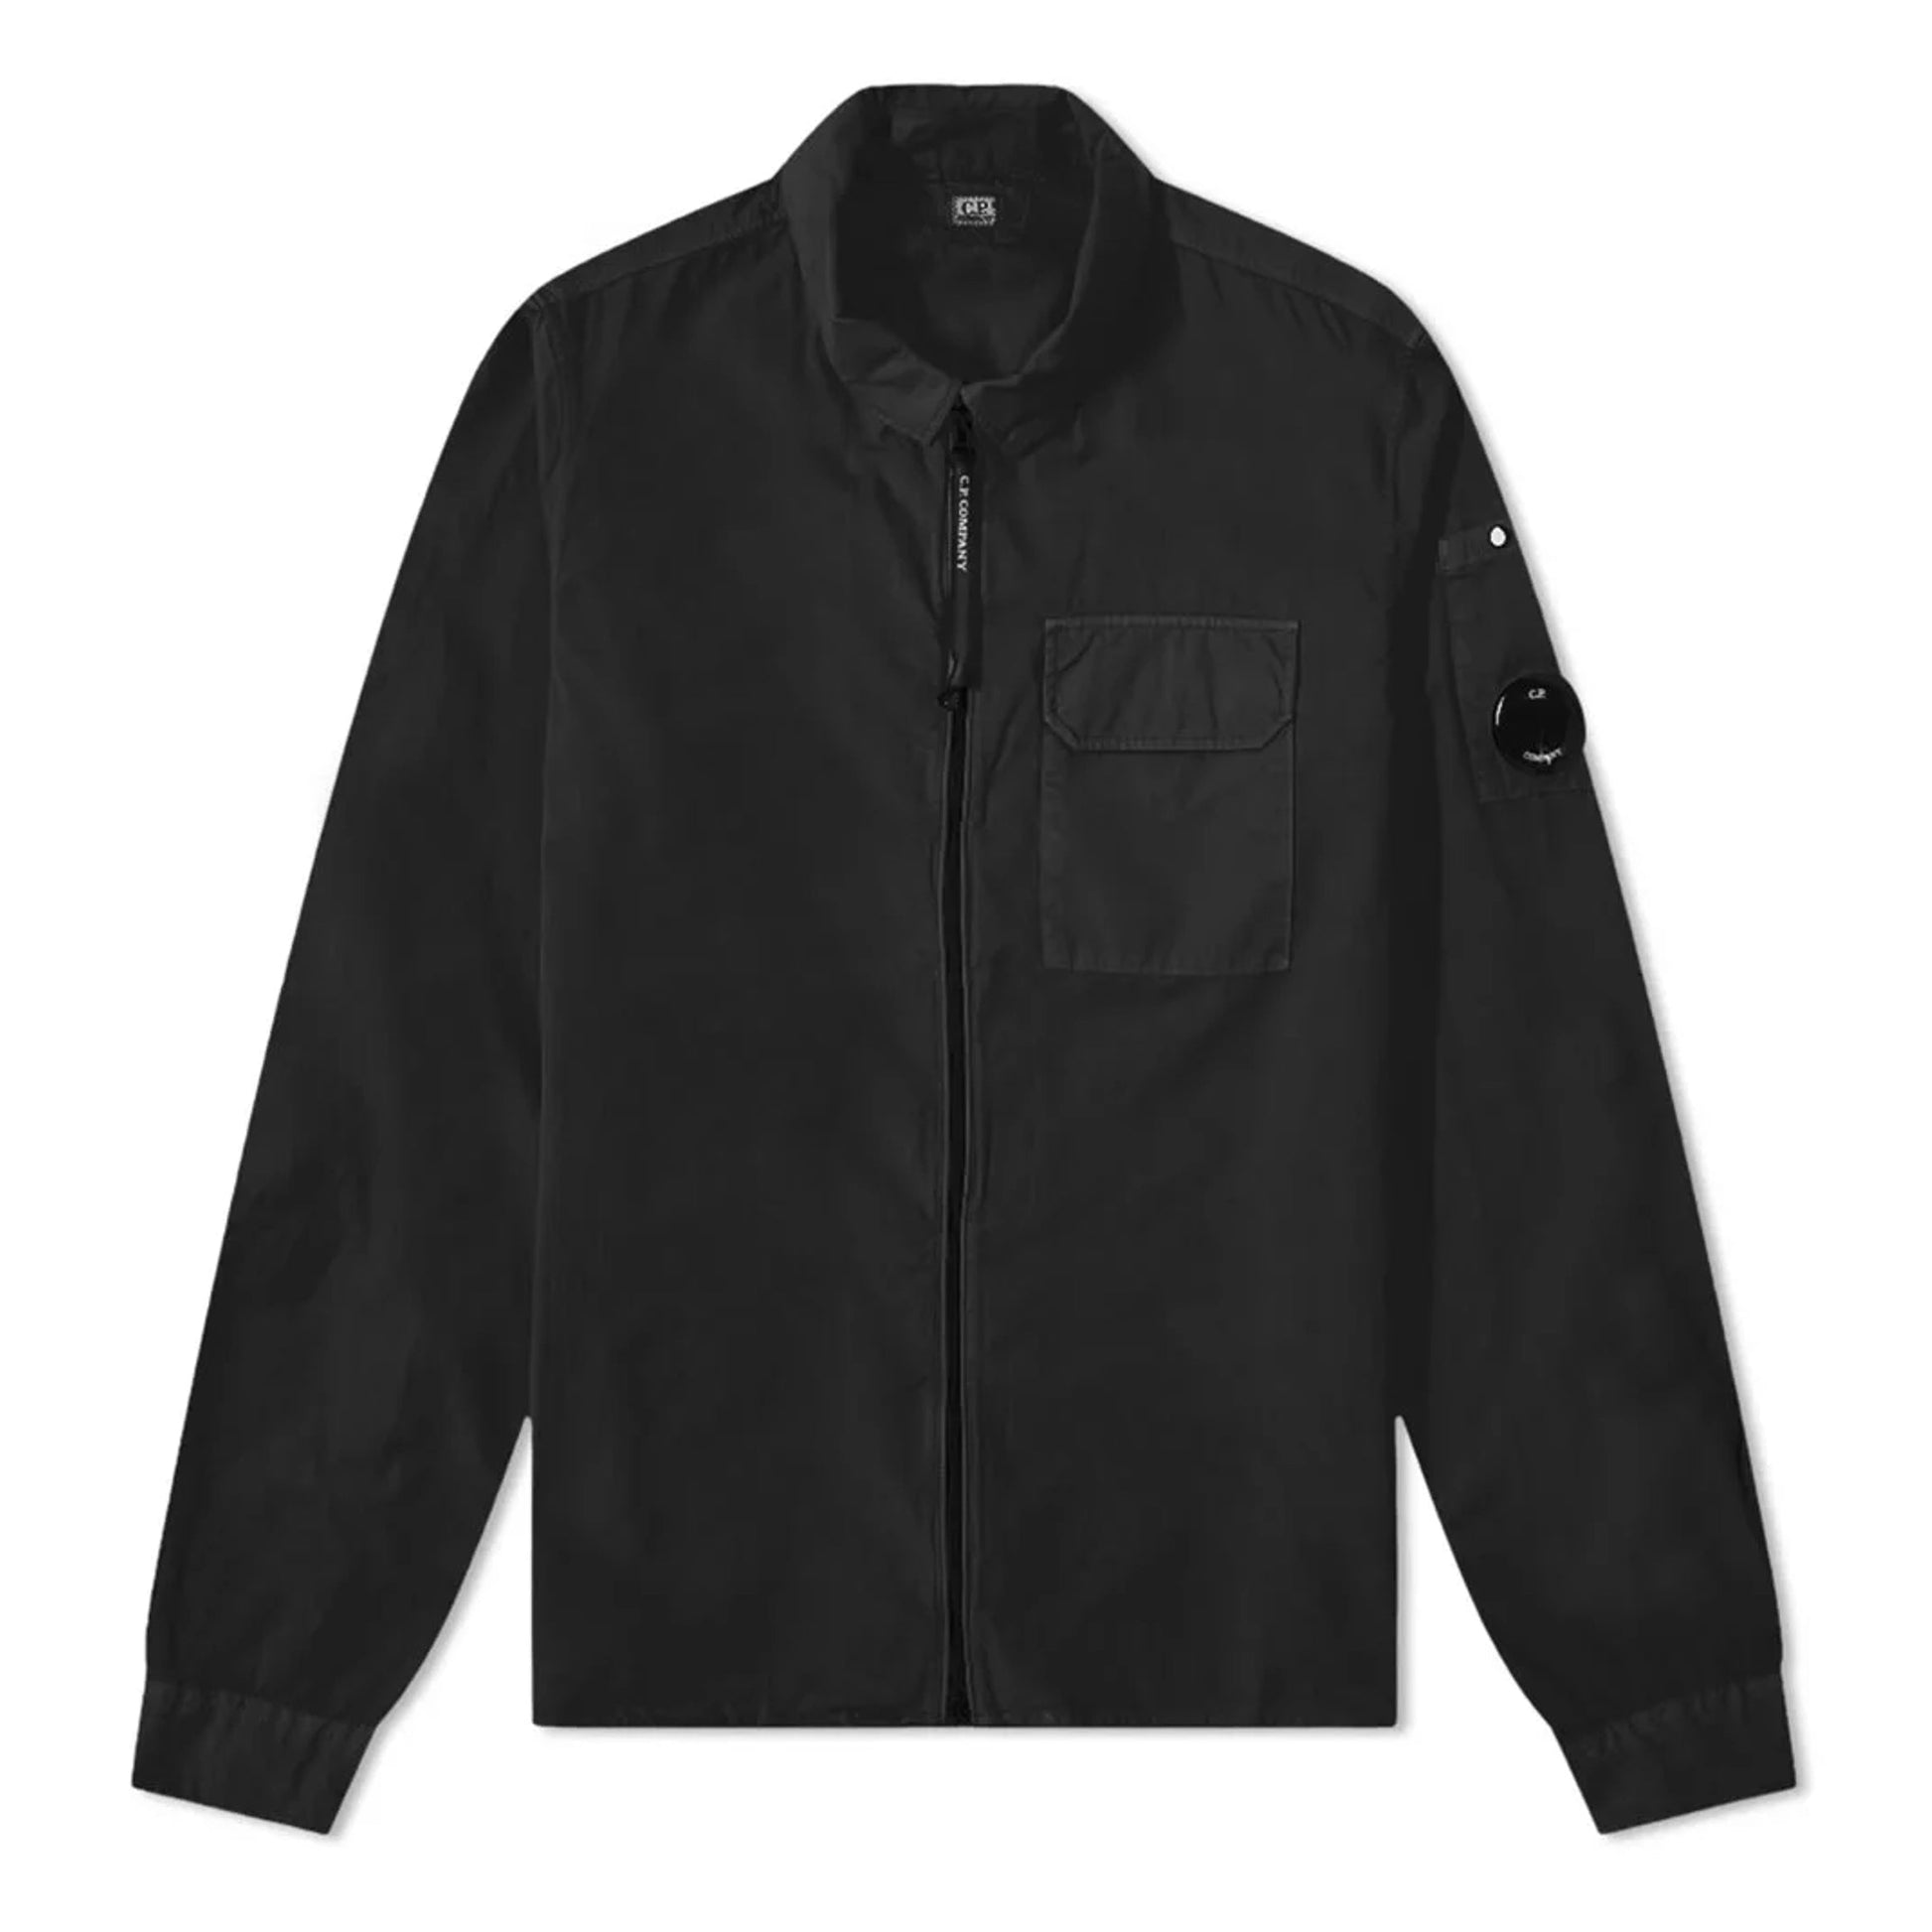 CP Company Zip Through Gabardine Overshirt - 999 Black - Escape Menswear